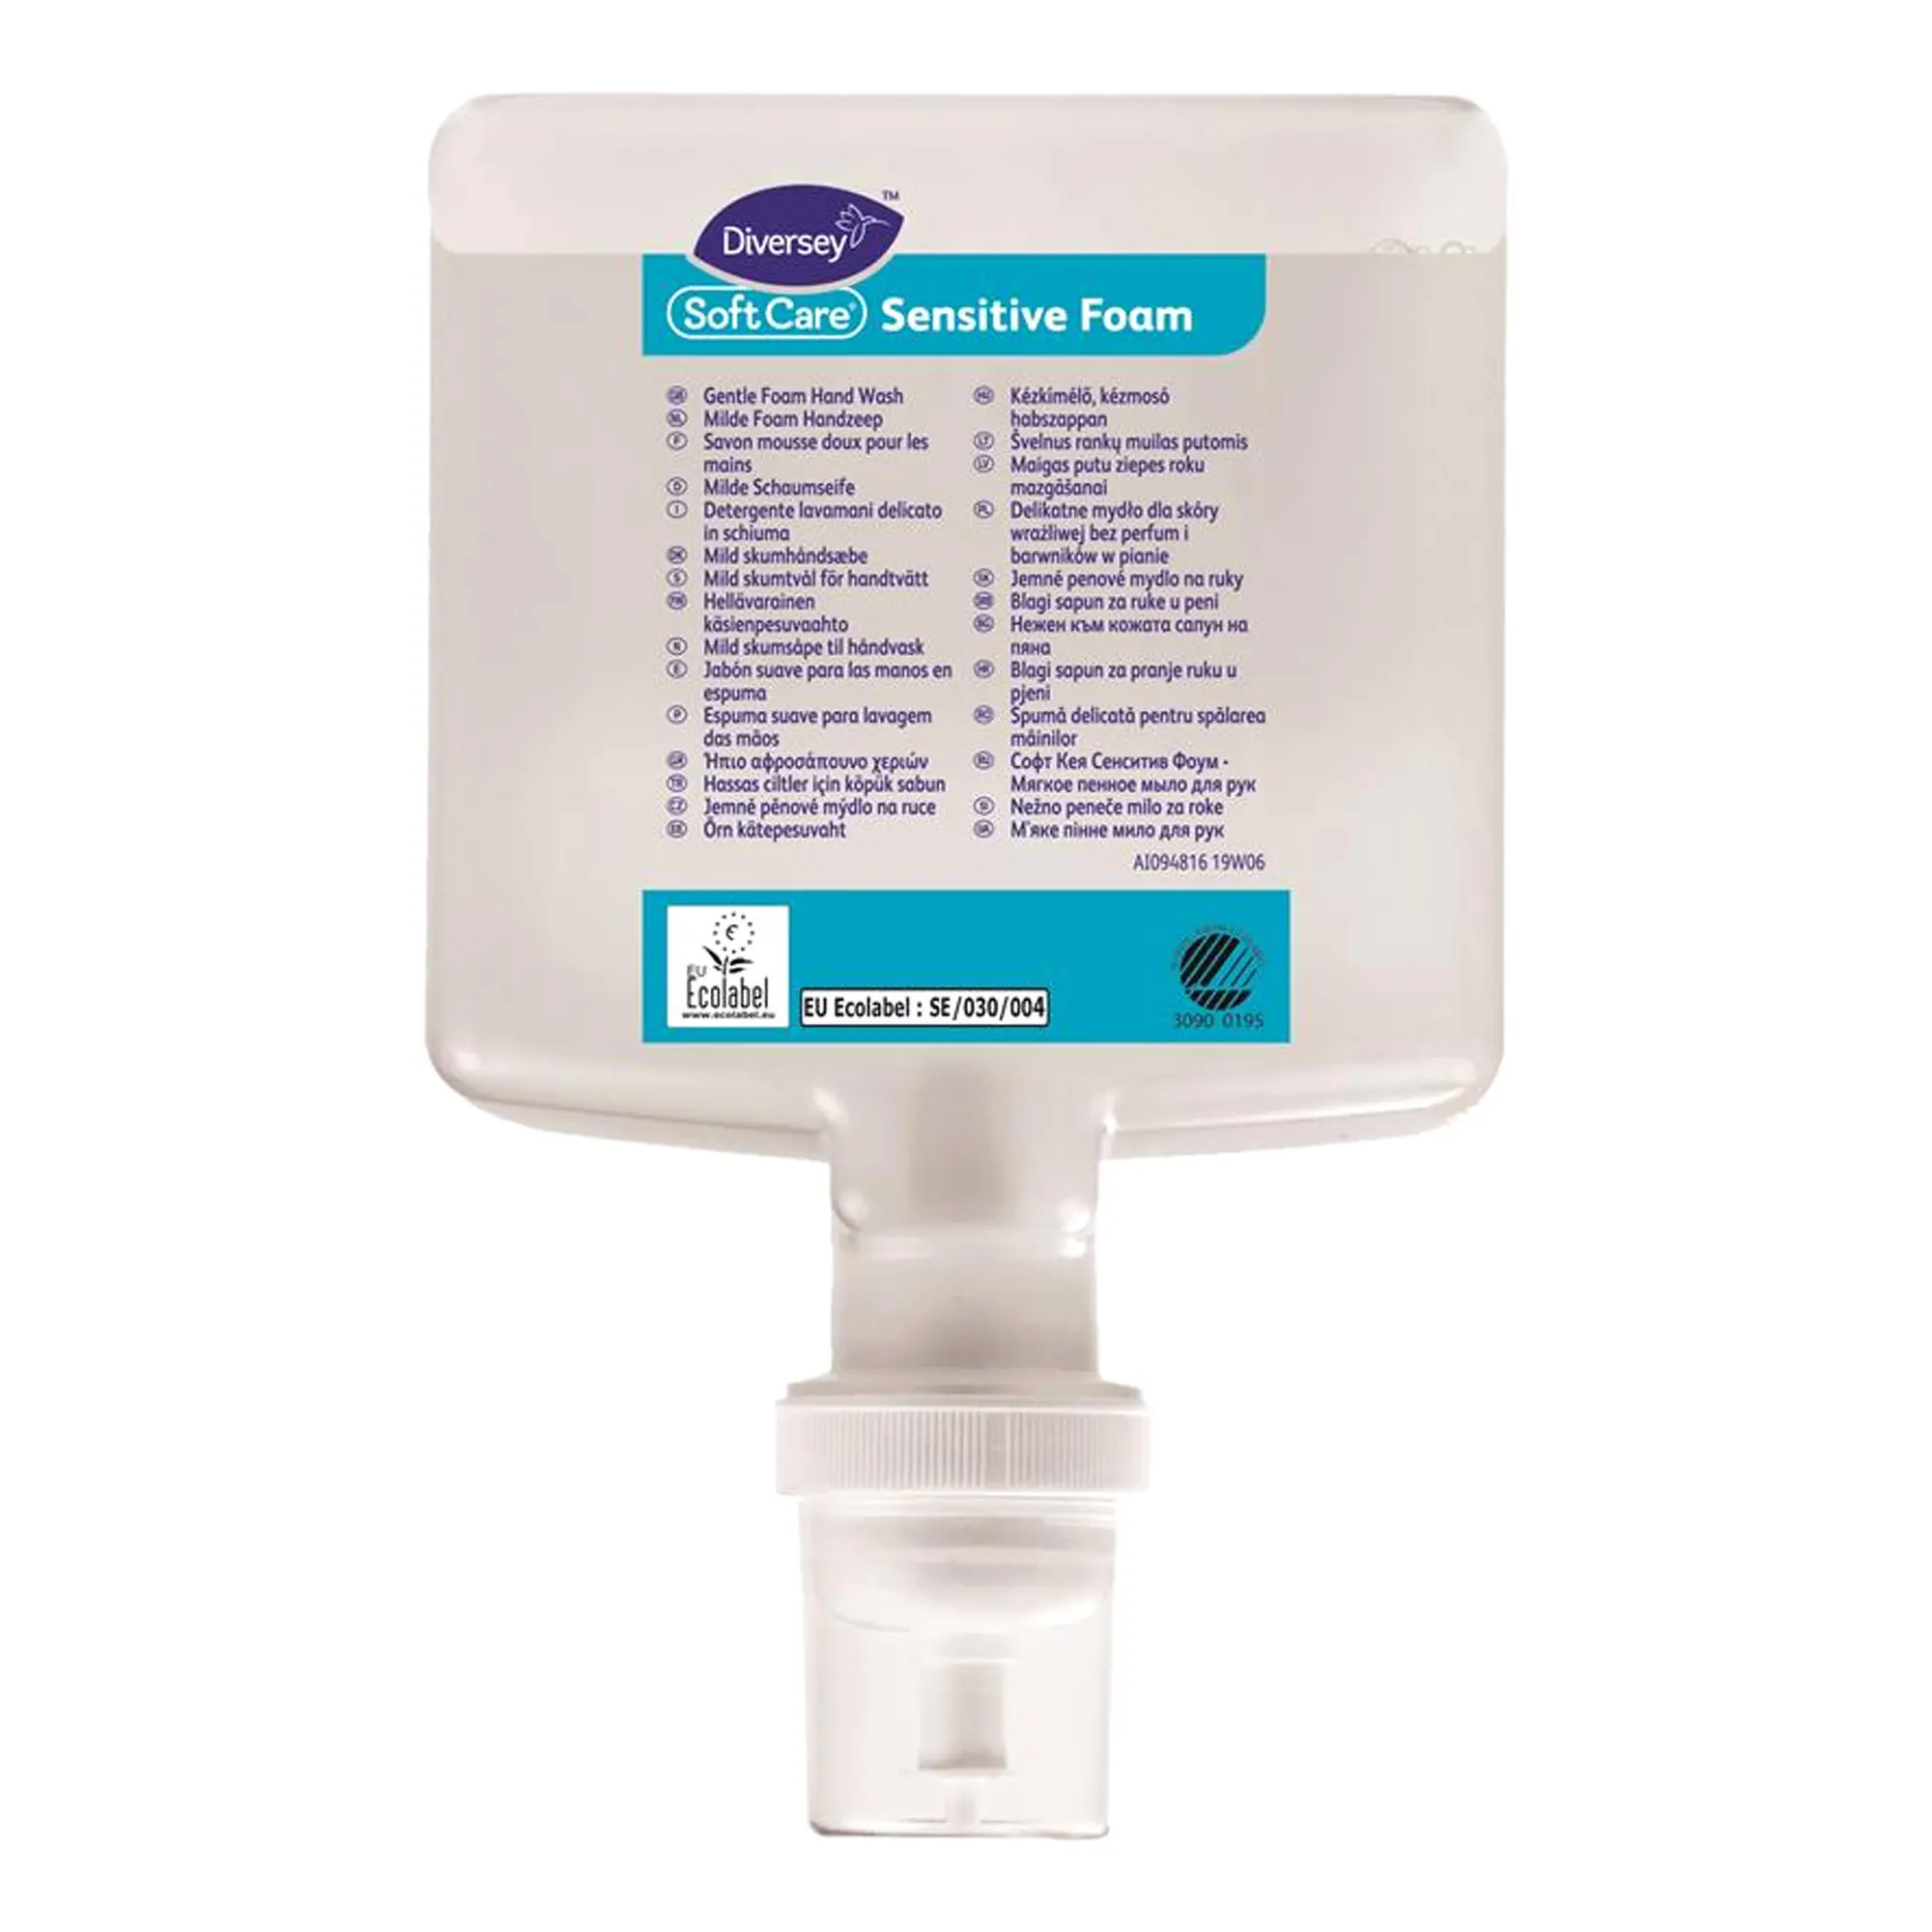 Soft Care Sensitive Foam Schaumseife 1,3 Liter IntelliCare Kartusche 100940174_1